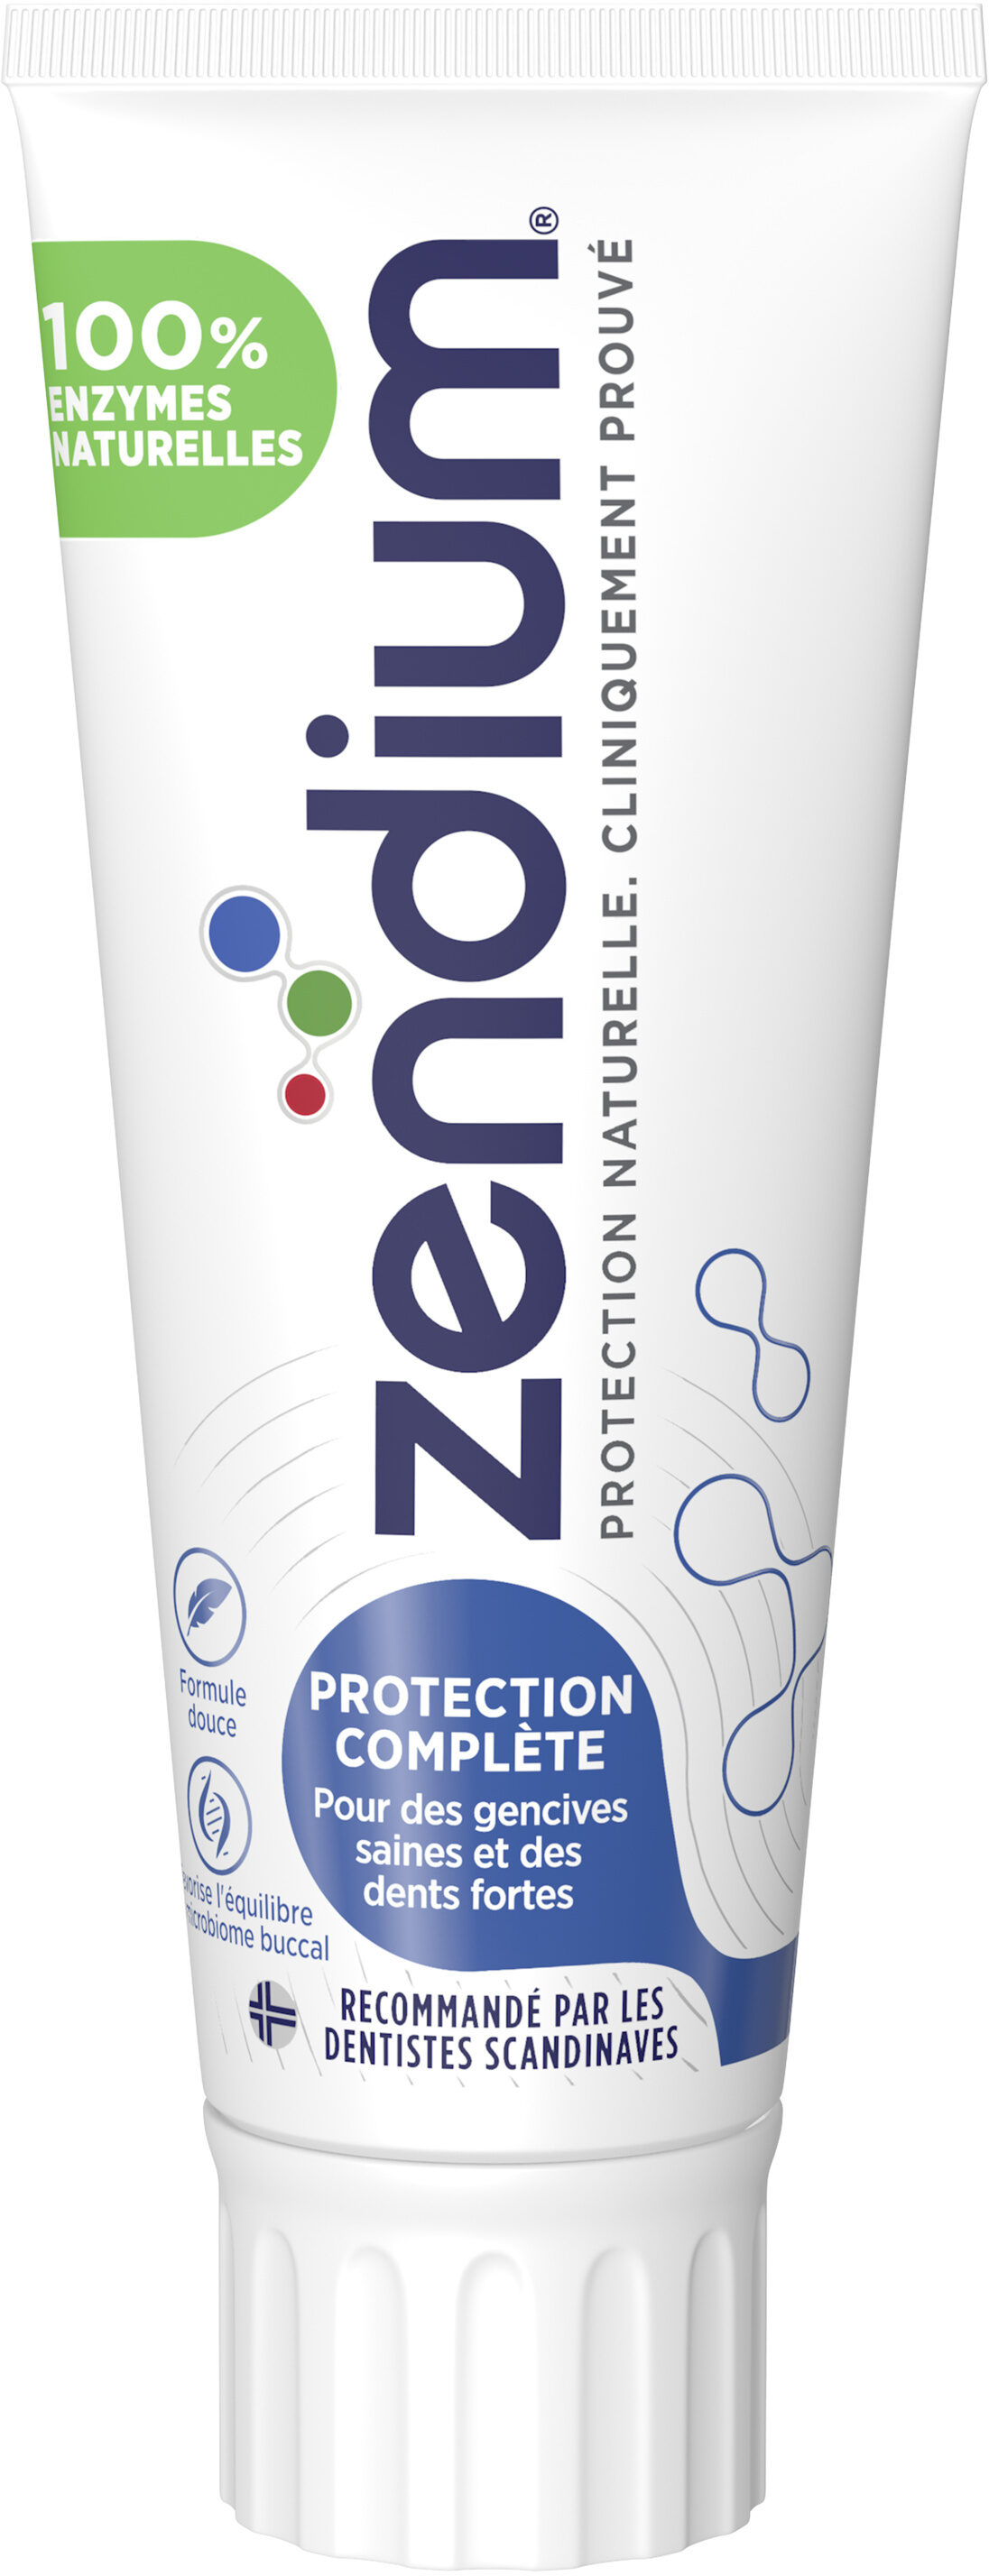 Zendium Dentifrice Protection Complète 75ml - Produto - fr